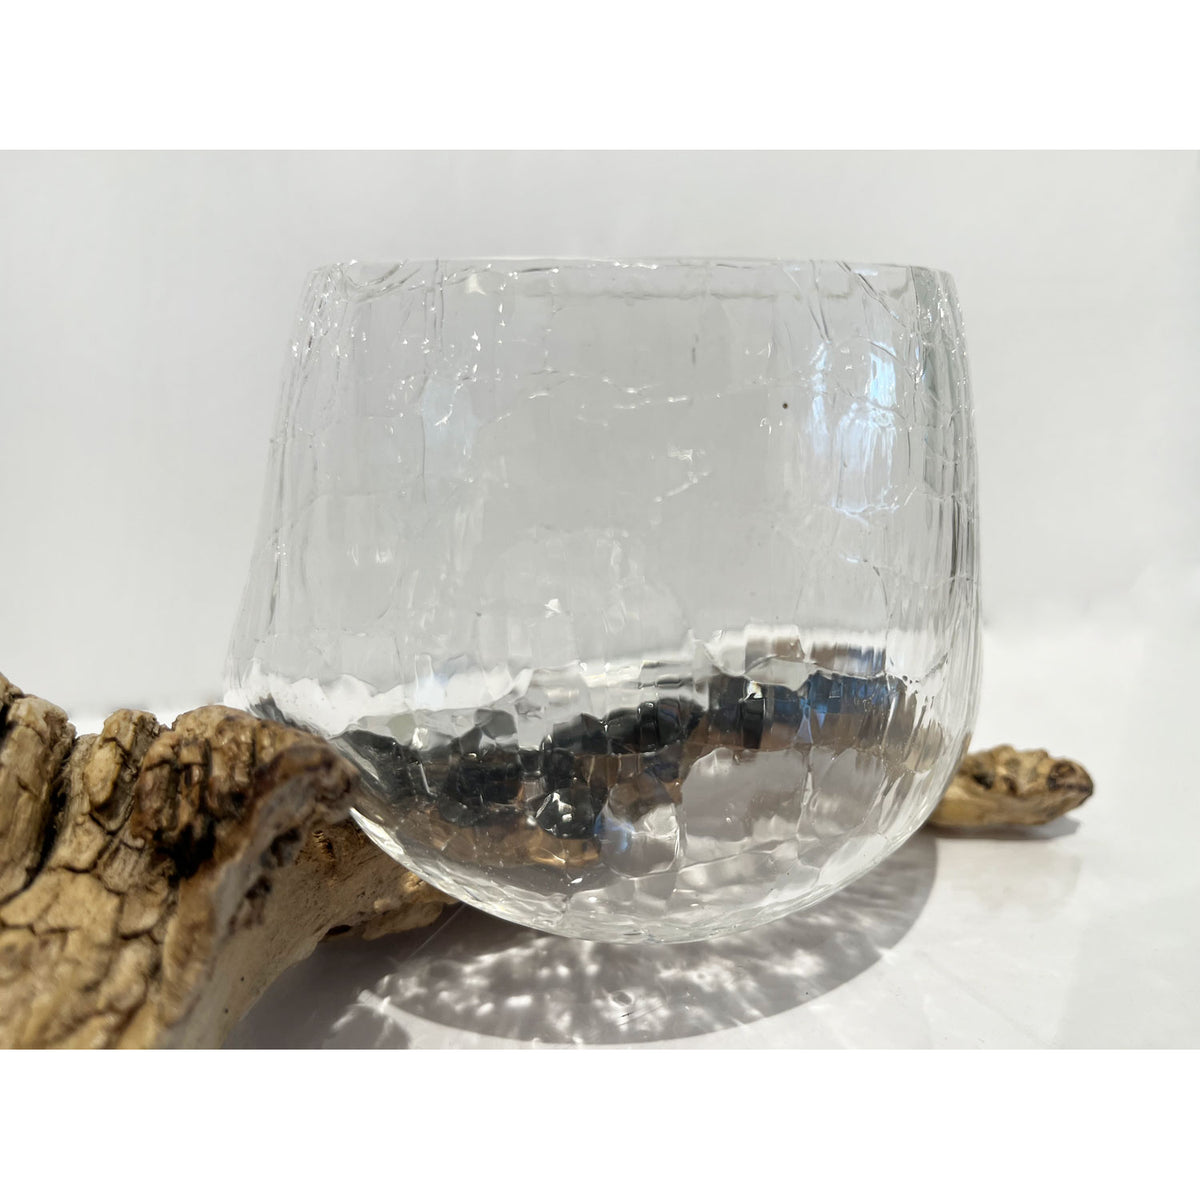 Michelle Bosveld - Crackle Glass Driftwood Bowl, 4" x 8" x 4"